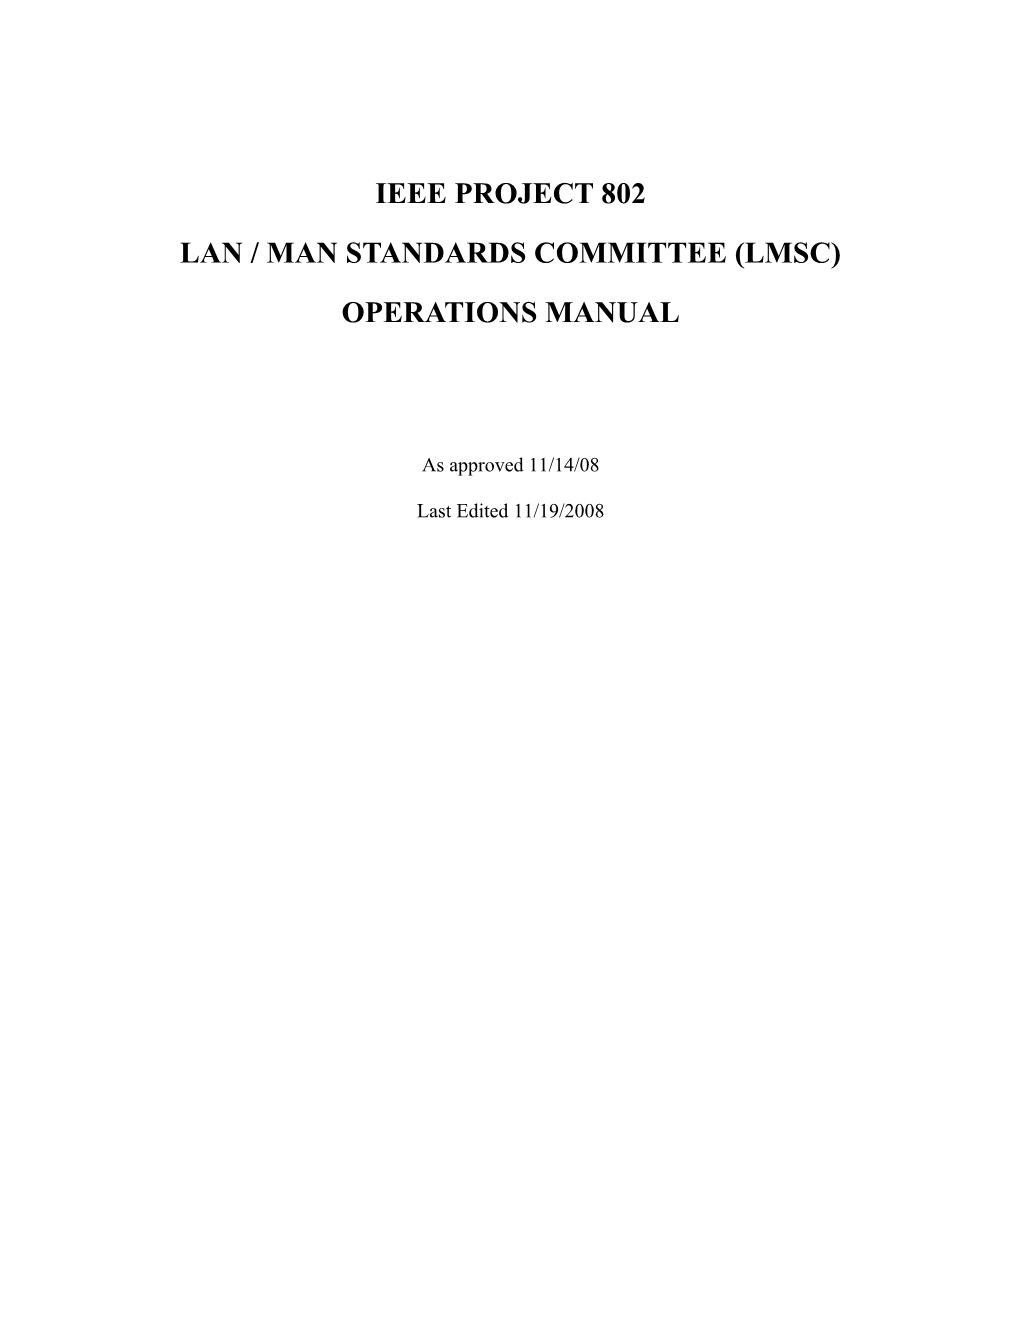 IEEE PROJECT 802 LAN MAN STANDARDS COMMITTEE (LMSC) POLICIES and PROCEDURES, Revised Effective s3